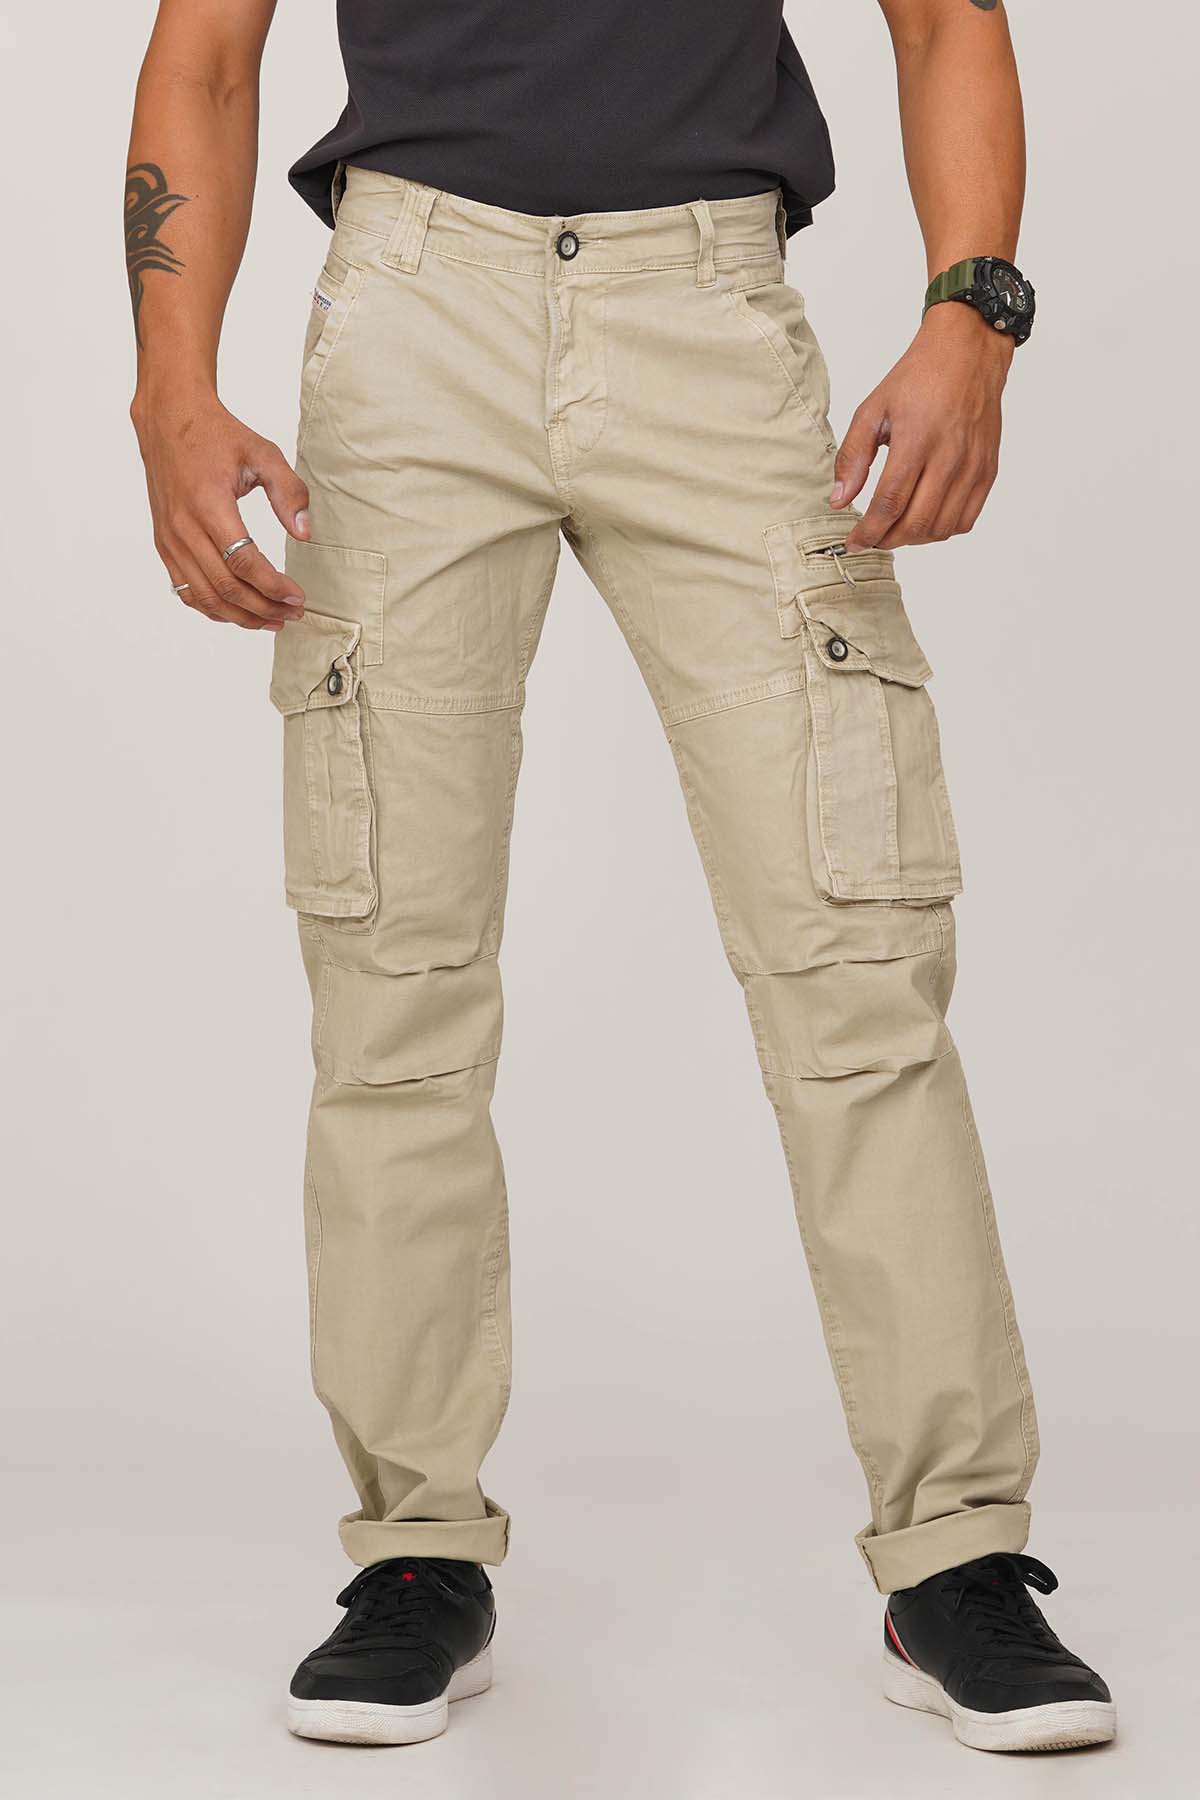 YW# Men 6 pocket cargo pants | Lazada PH-hkpdtq2012.edu.vn